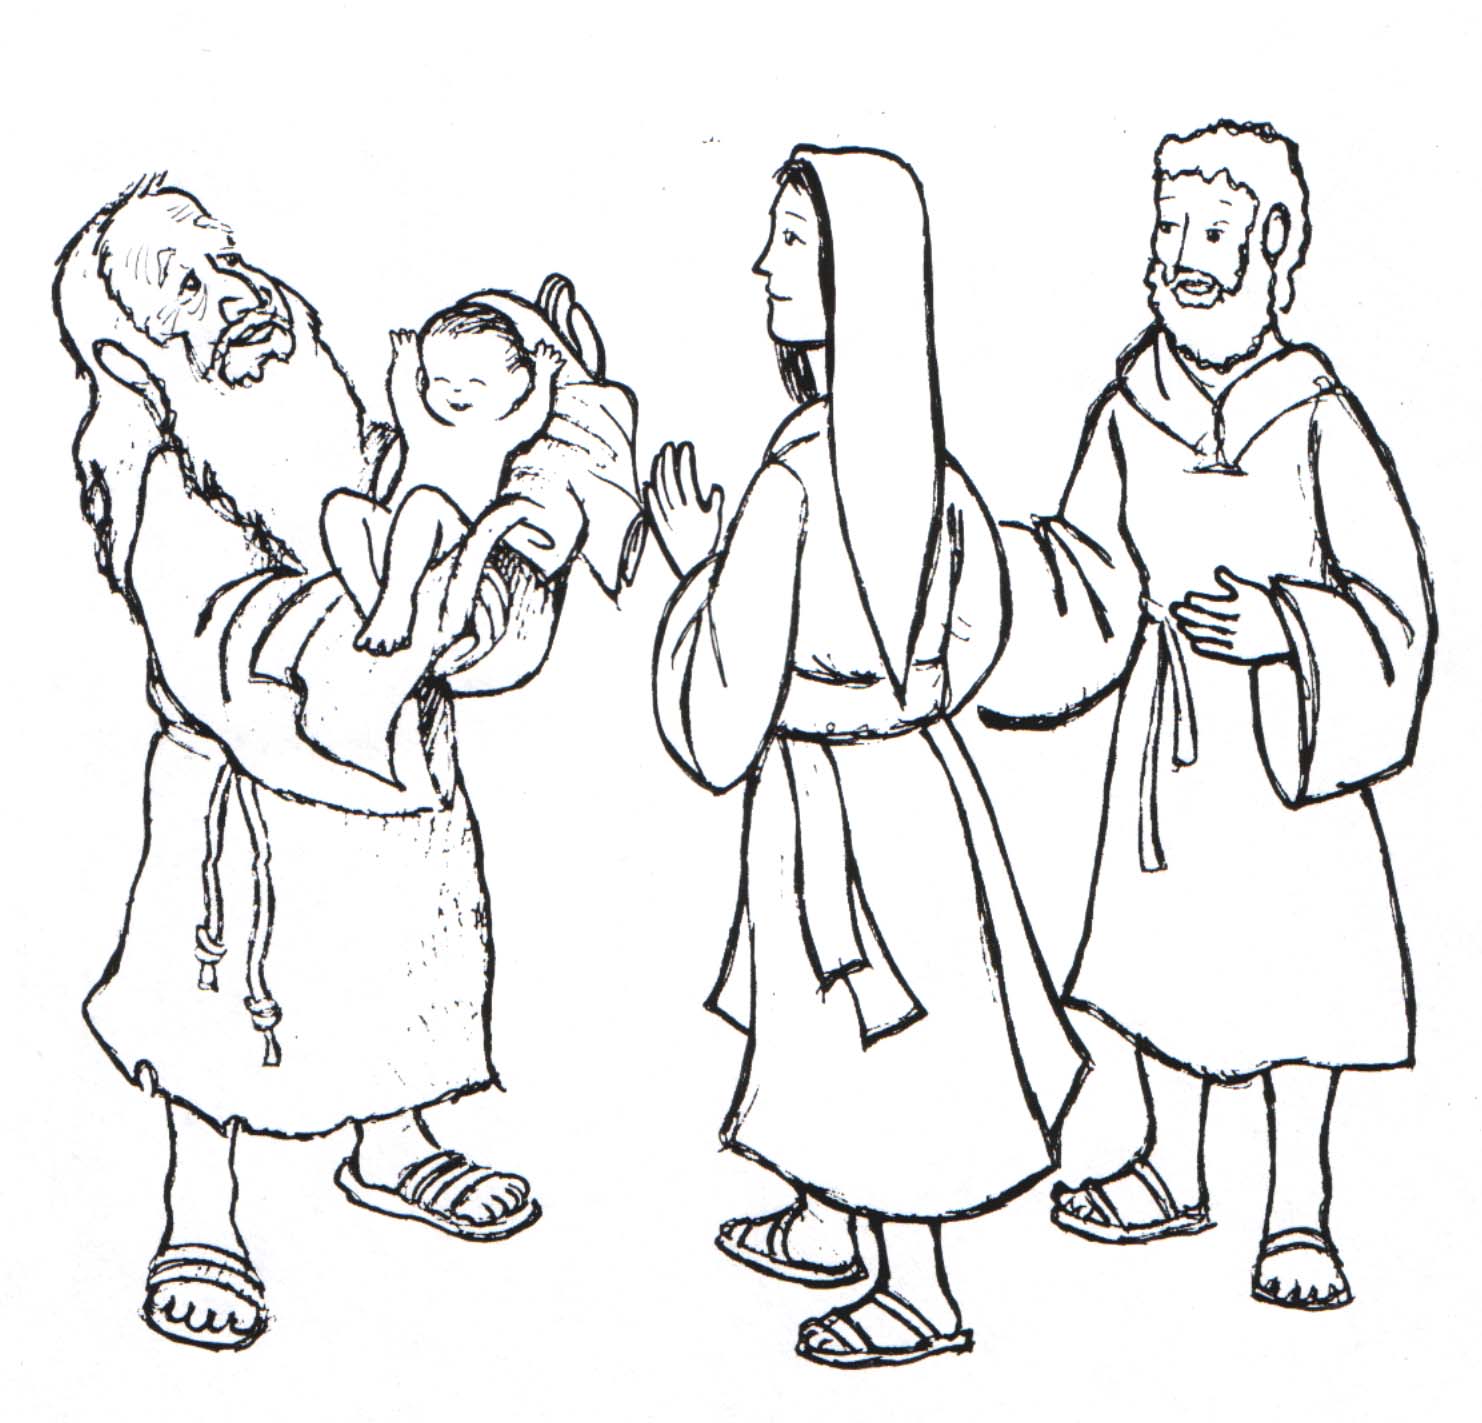 Simeon And Baby Jesus drawing free image download